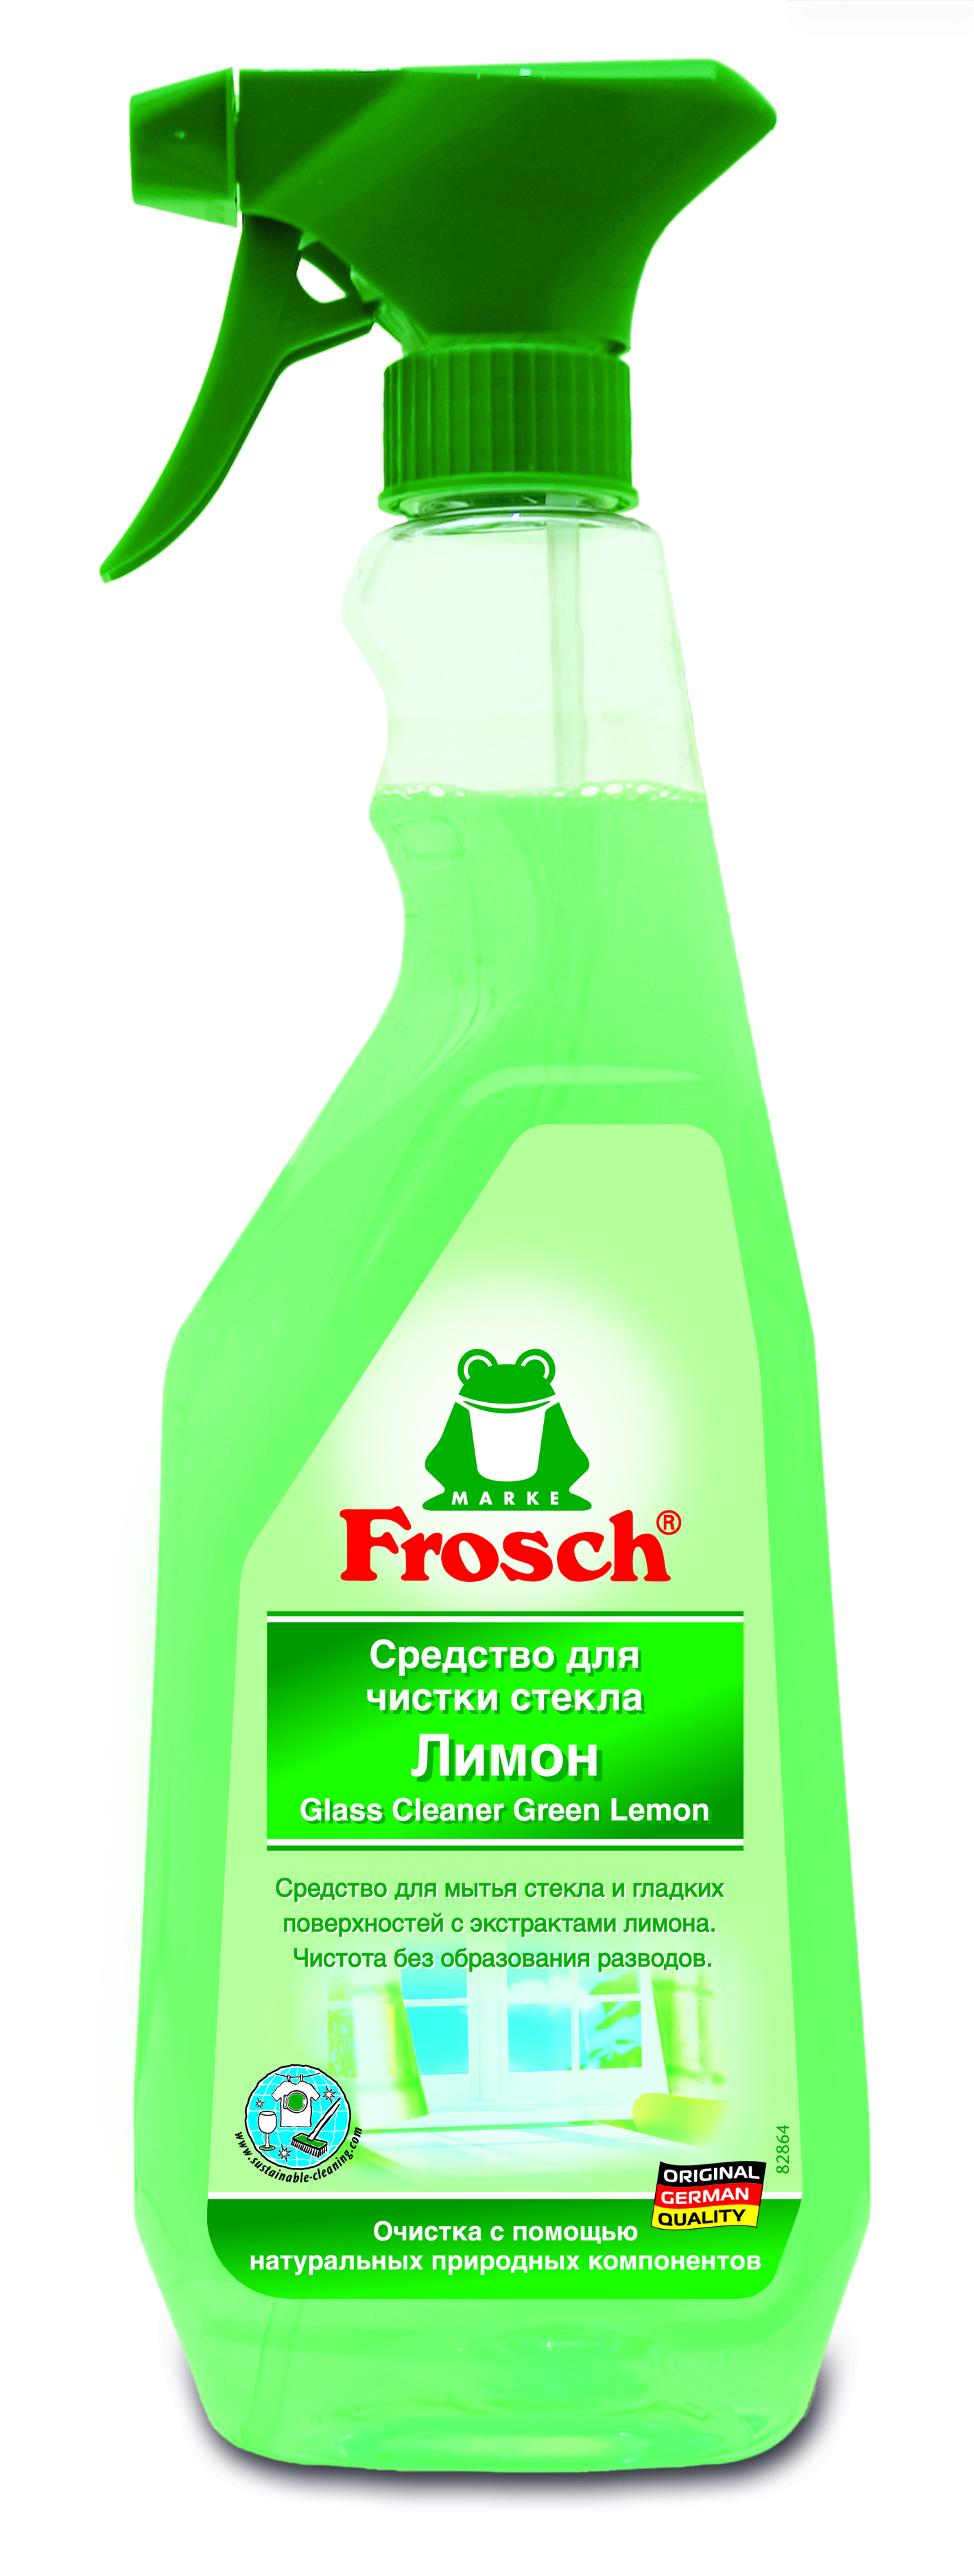 Средство для мытья стекол Frosch Лимон, 750 мл - фото 1